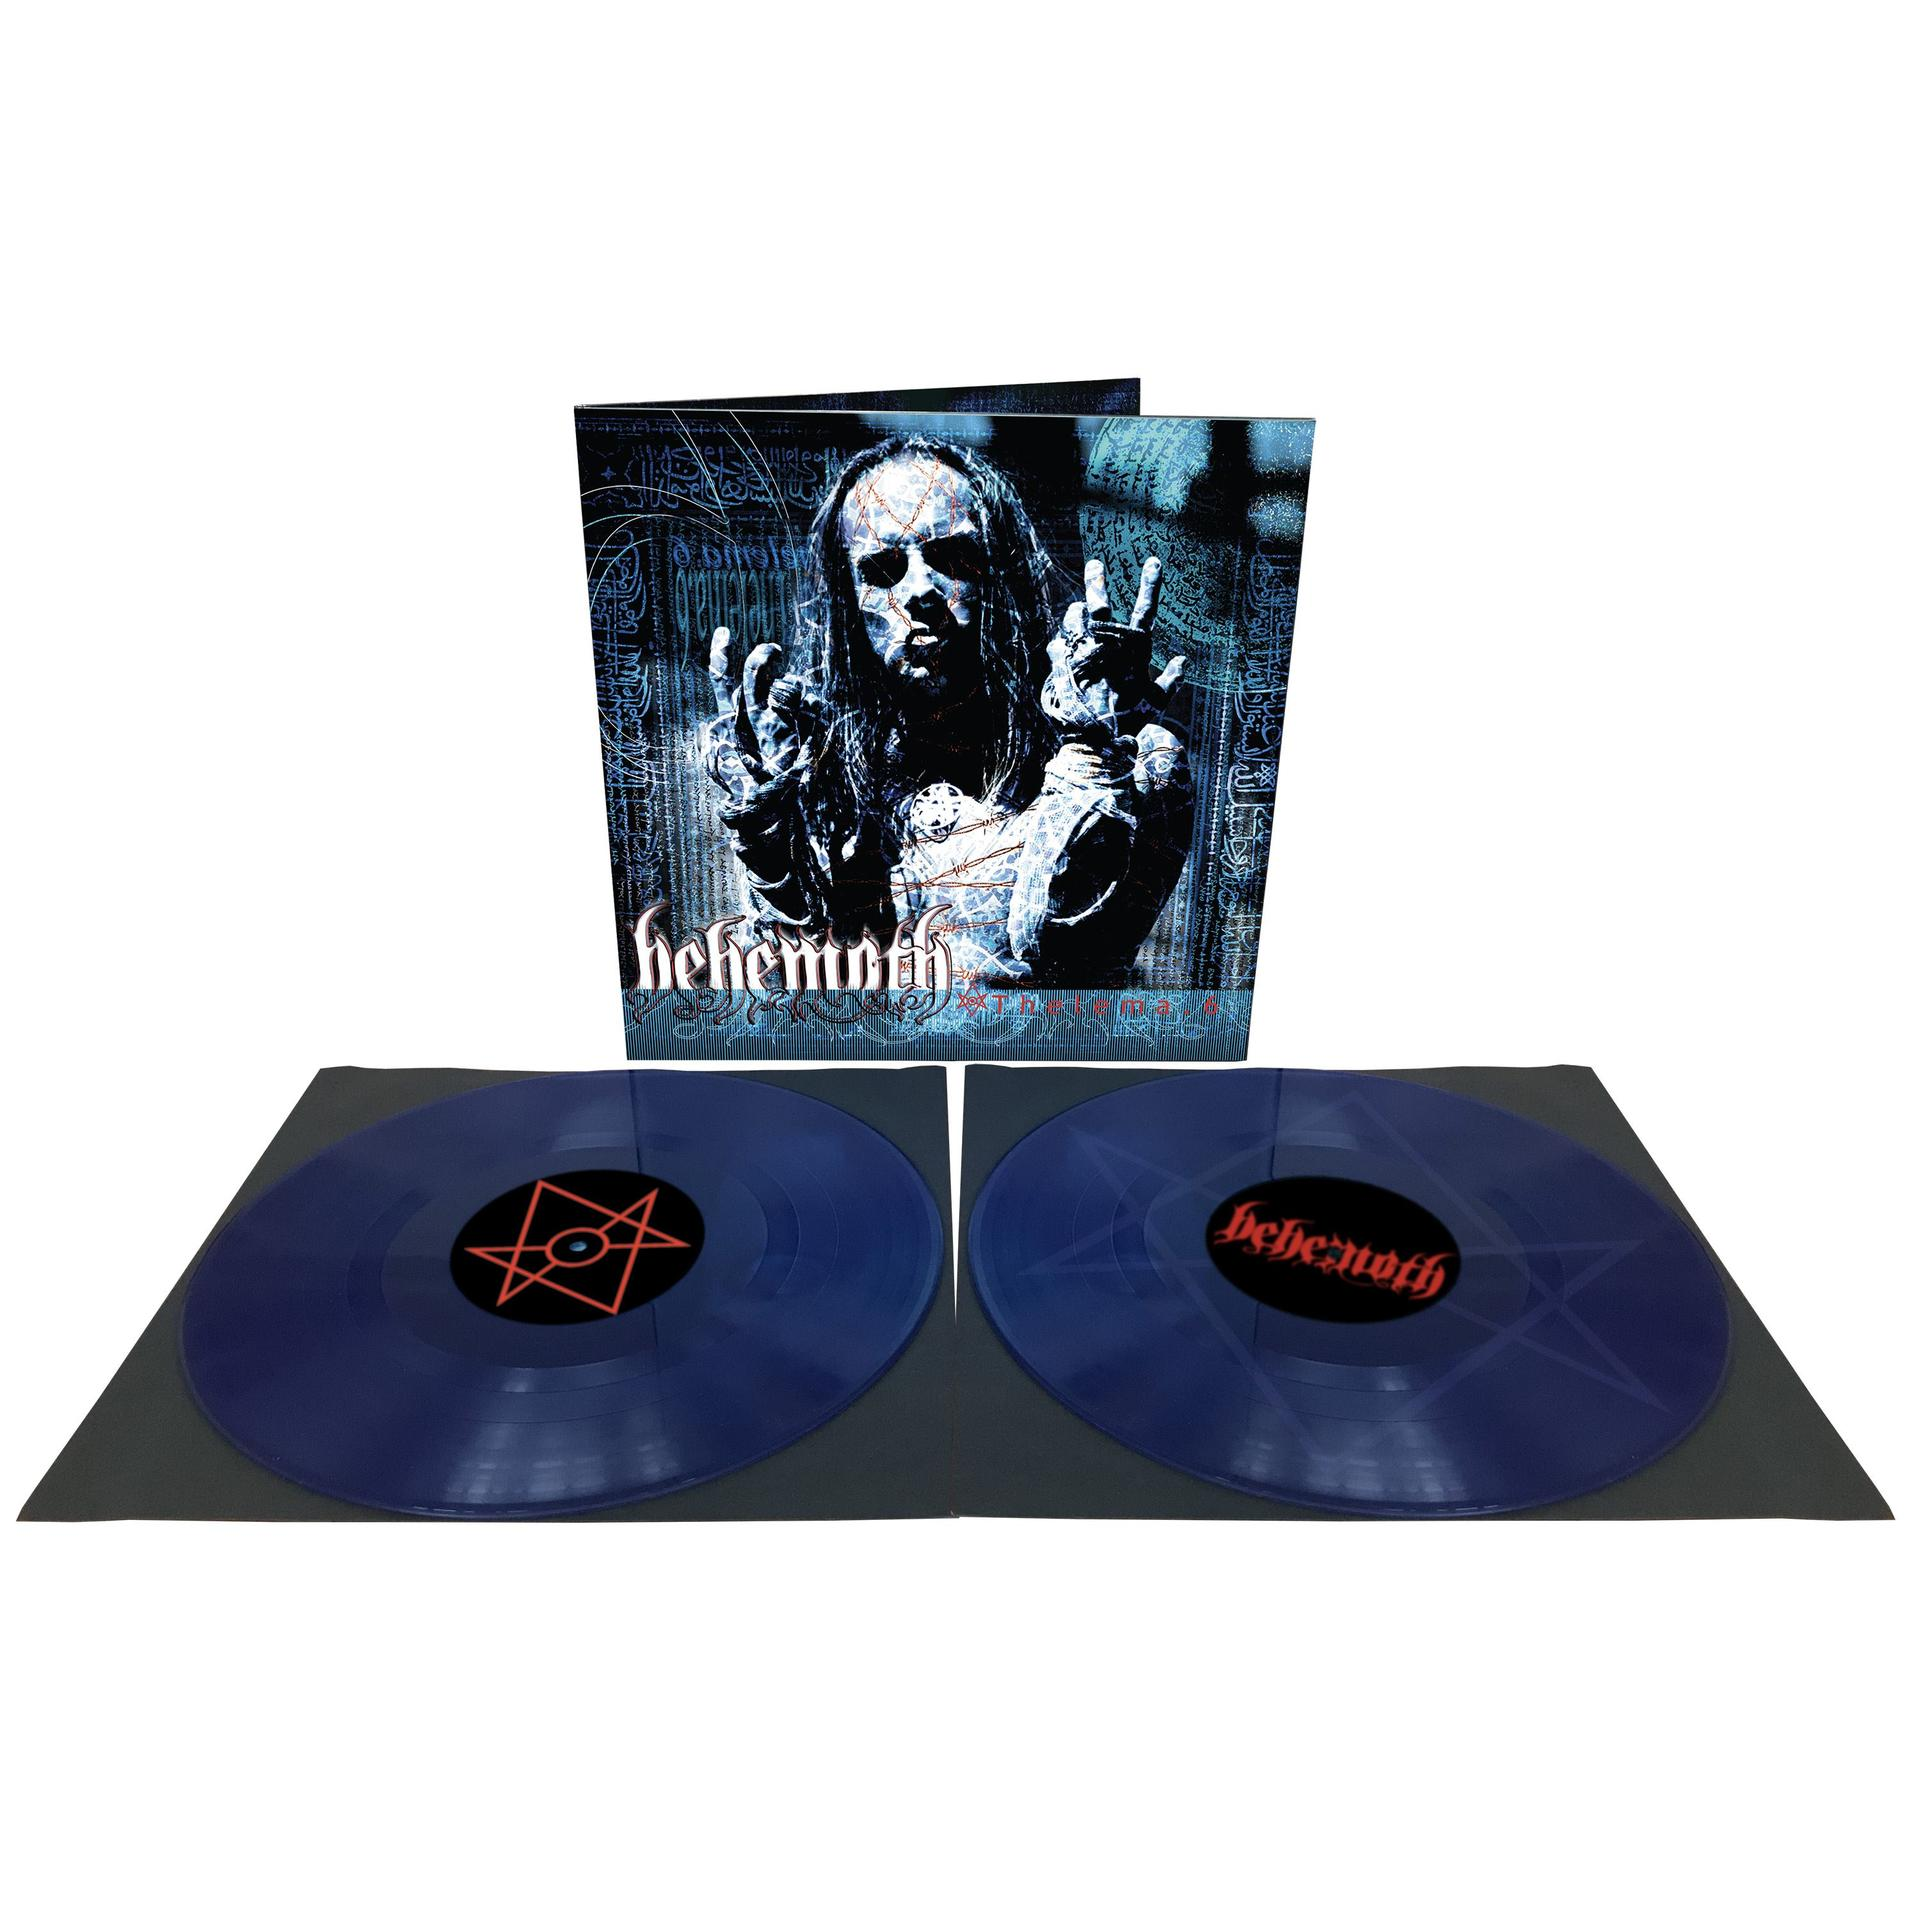 Behemoth - Thelema.6 - (Vinyl) (Blue LP)